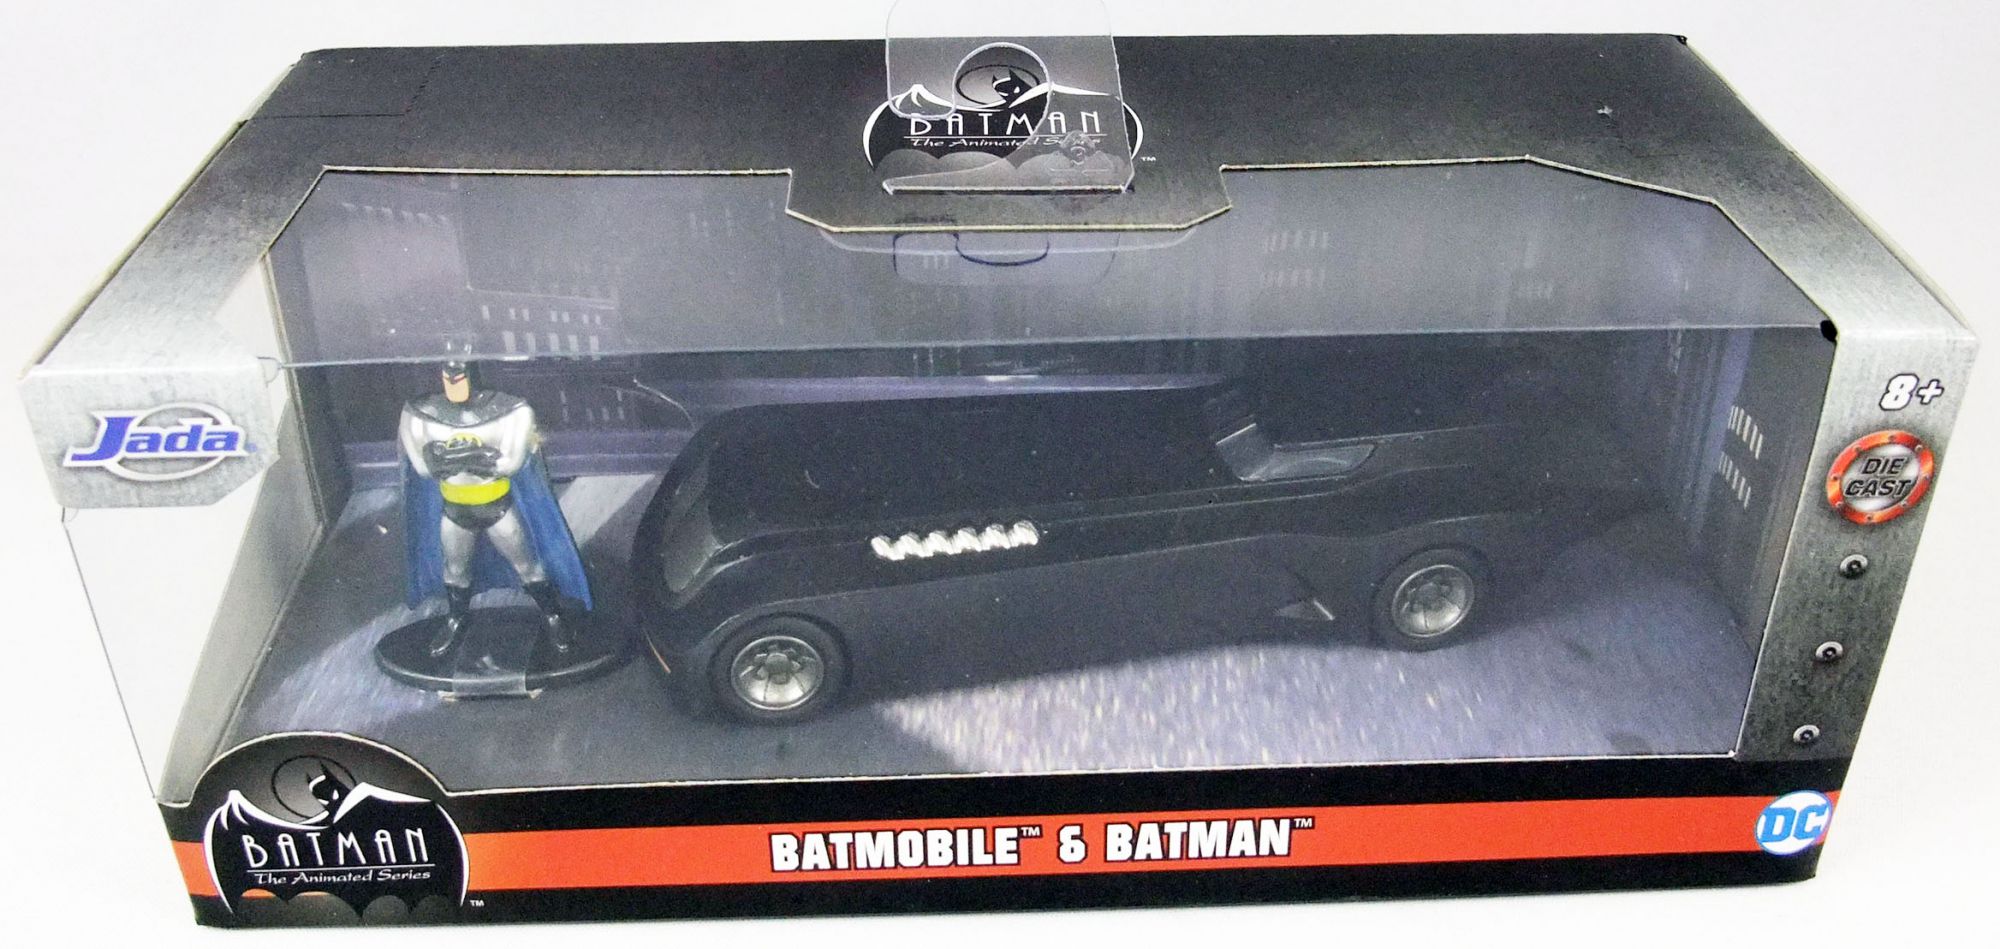 24 Scale Animated Series Batmobile Diecast Vehicle with Batman Figure Jada Toys 1 